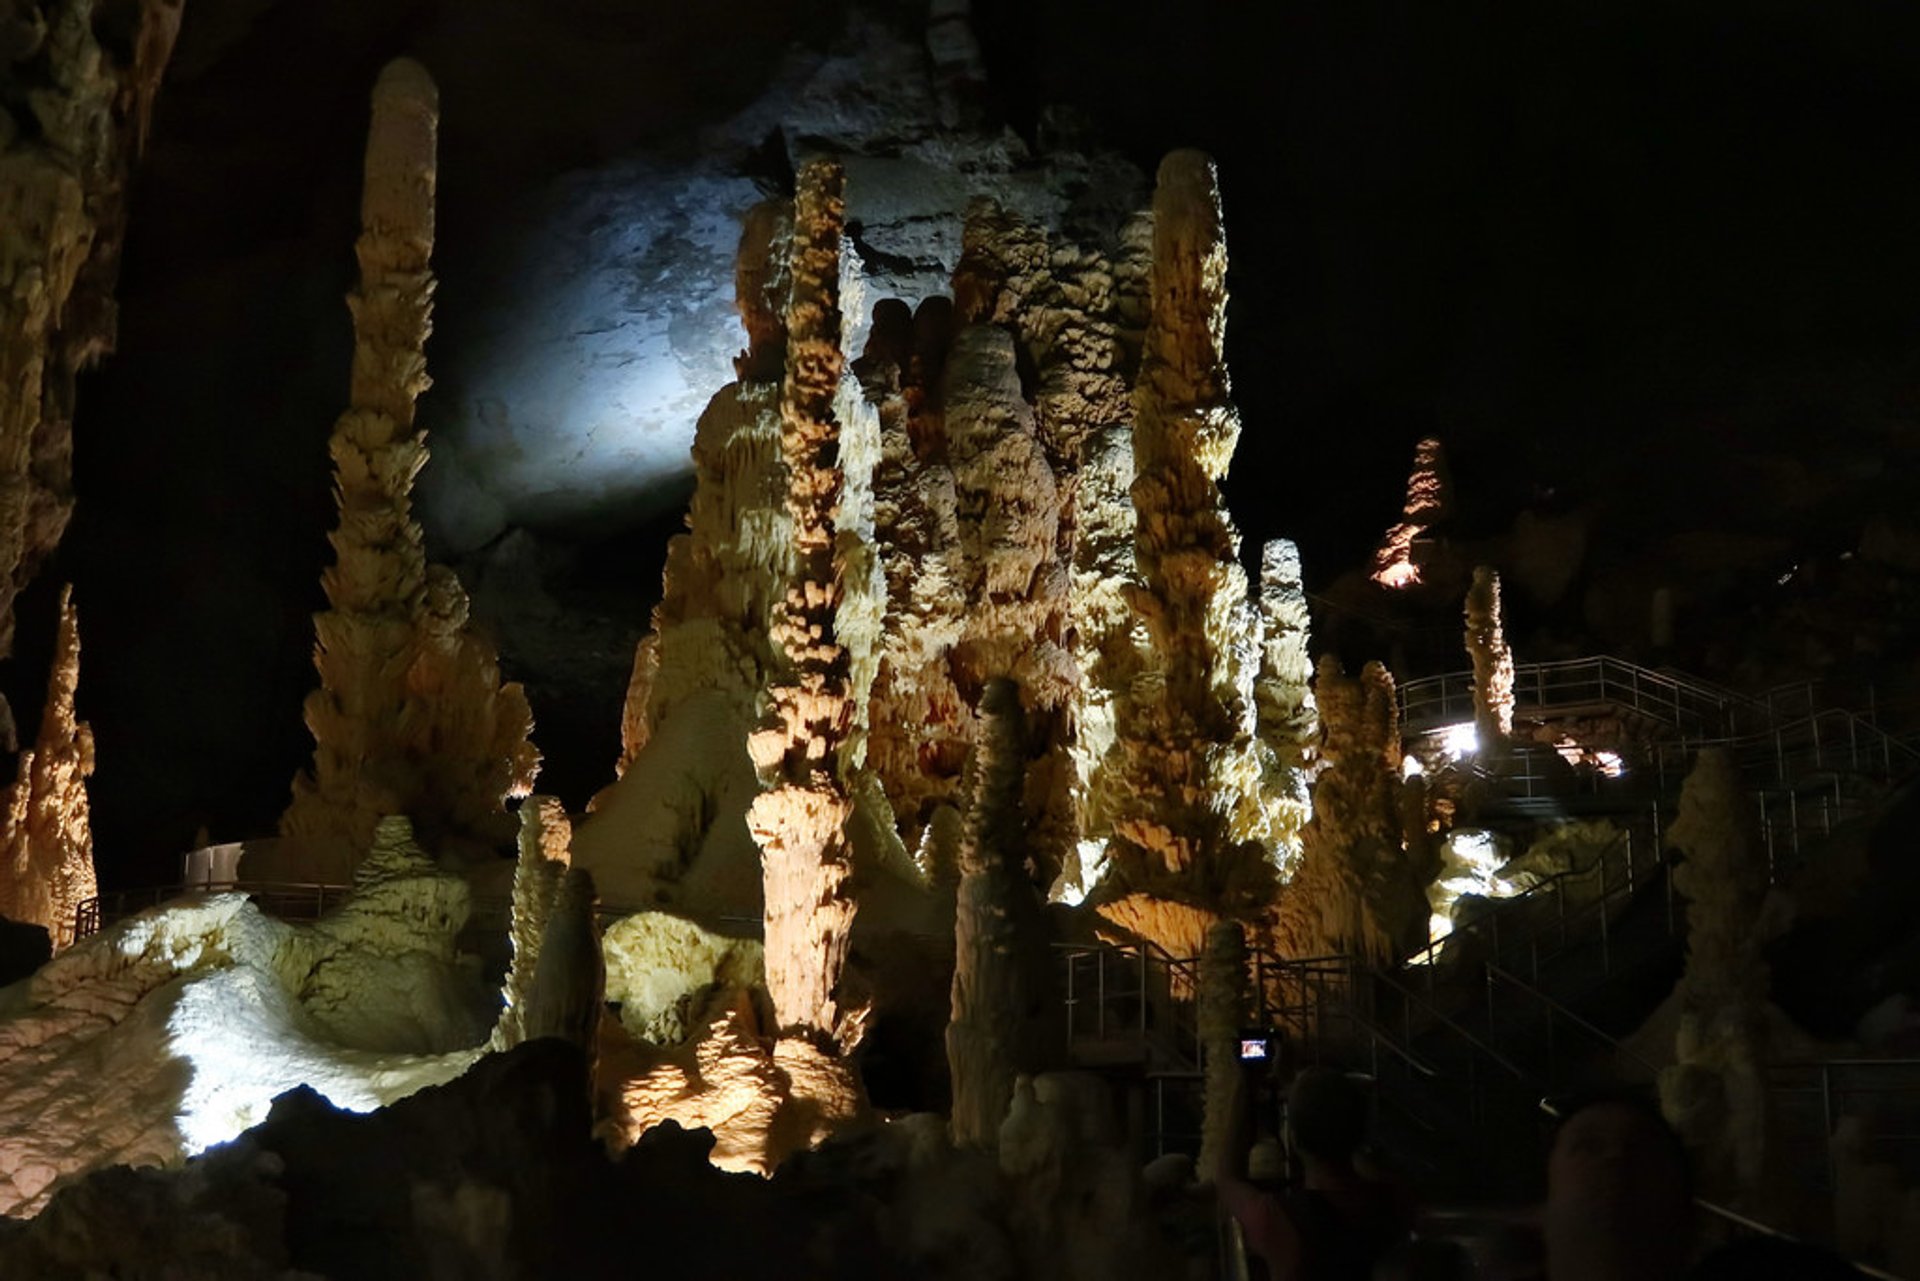 Grottes de Frasassi (Grotte de Frasassi), Genga